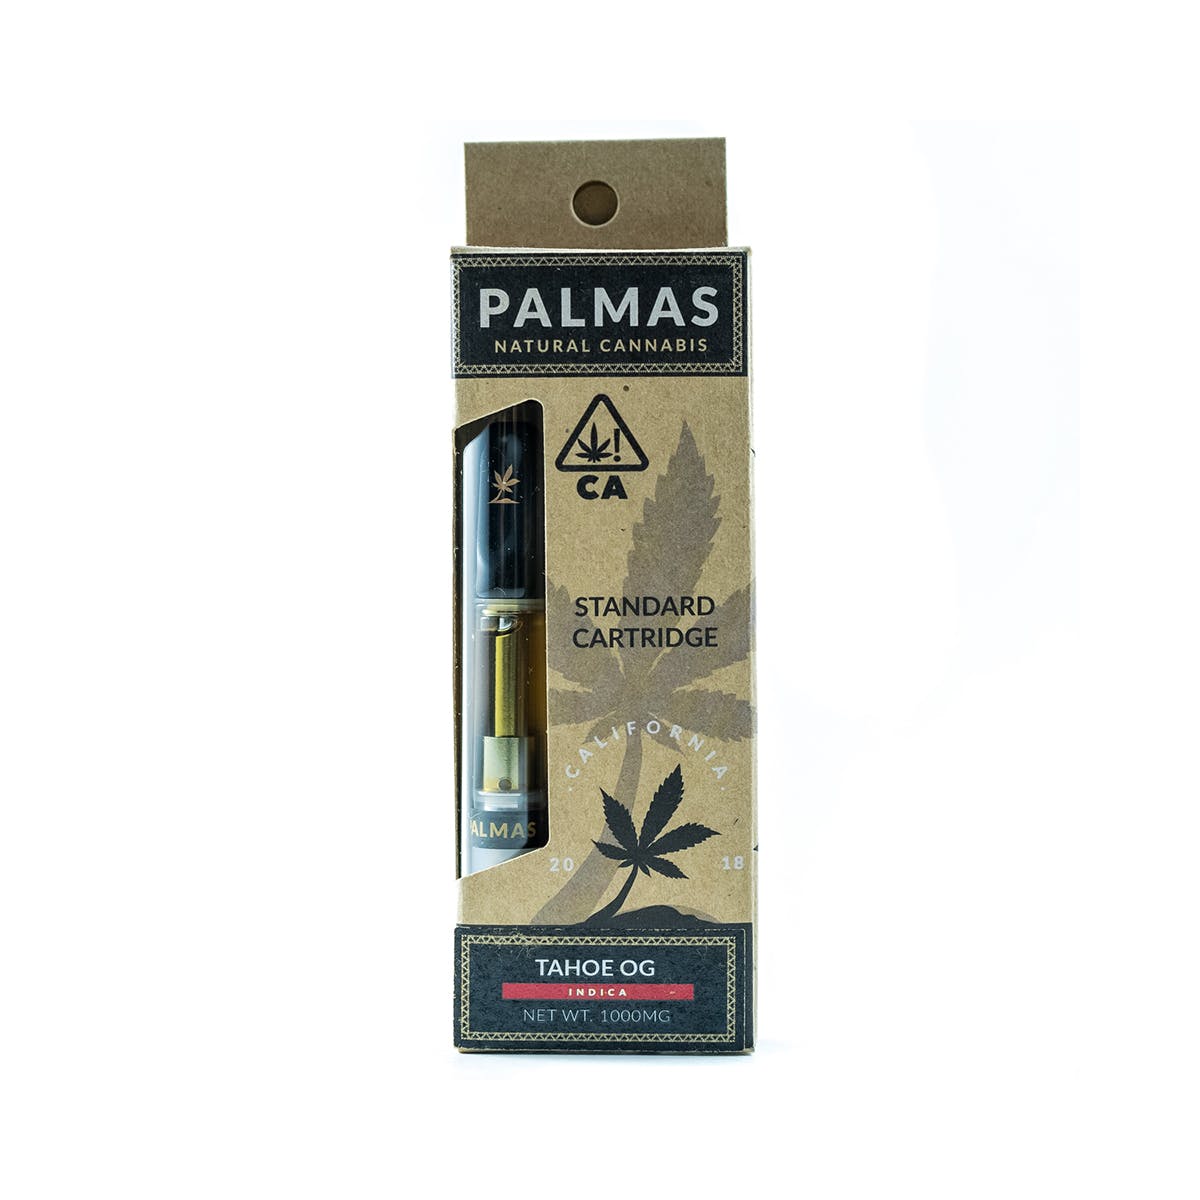 marijuana-dispensaries-gold-20-cap-collective-in-los-angeles-palmas-standard-cartridge-tahoe-og